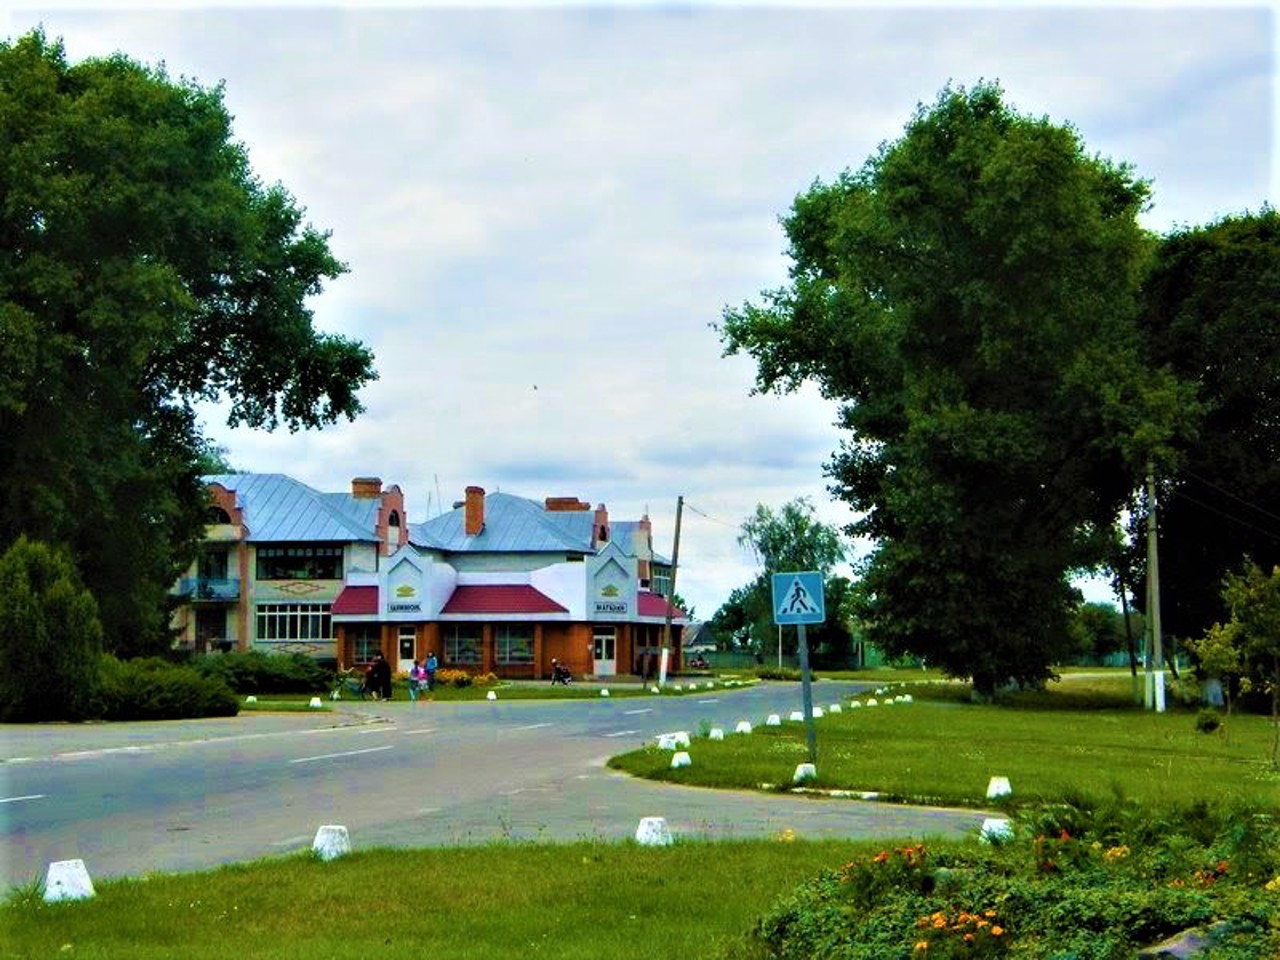 Chaikyne village, Chernihiv region